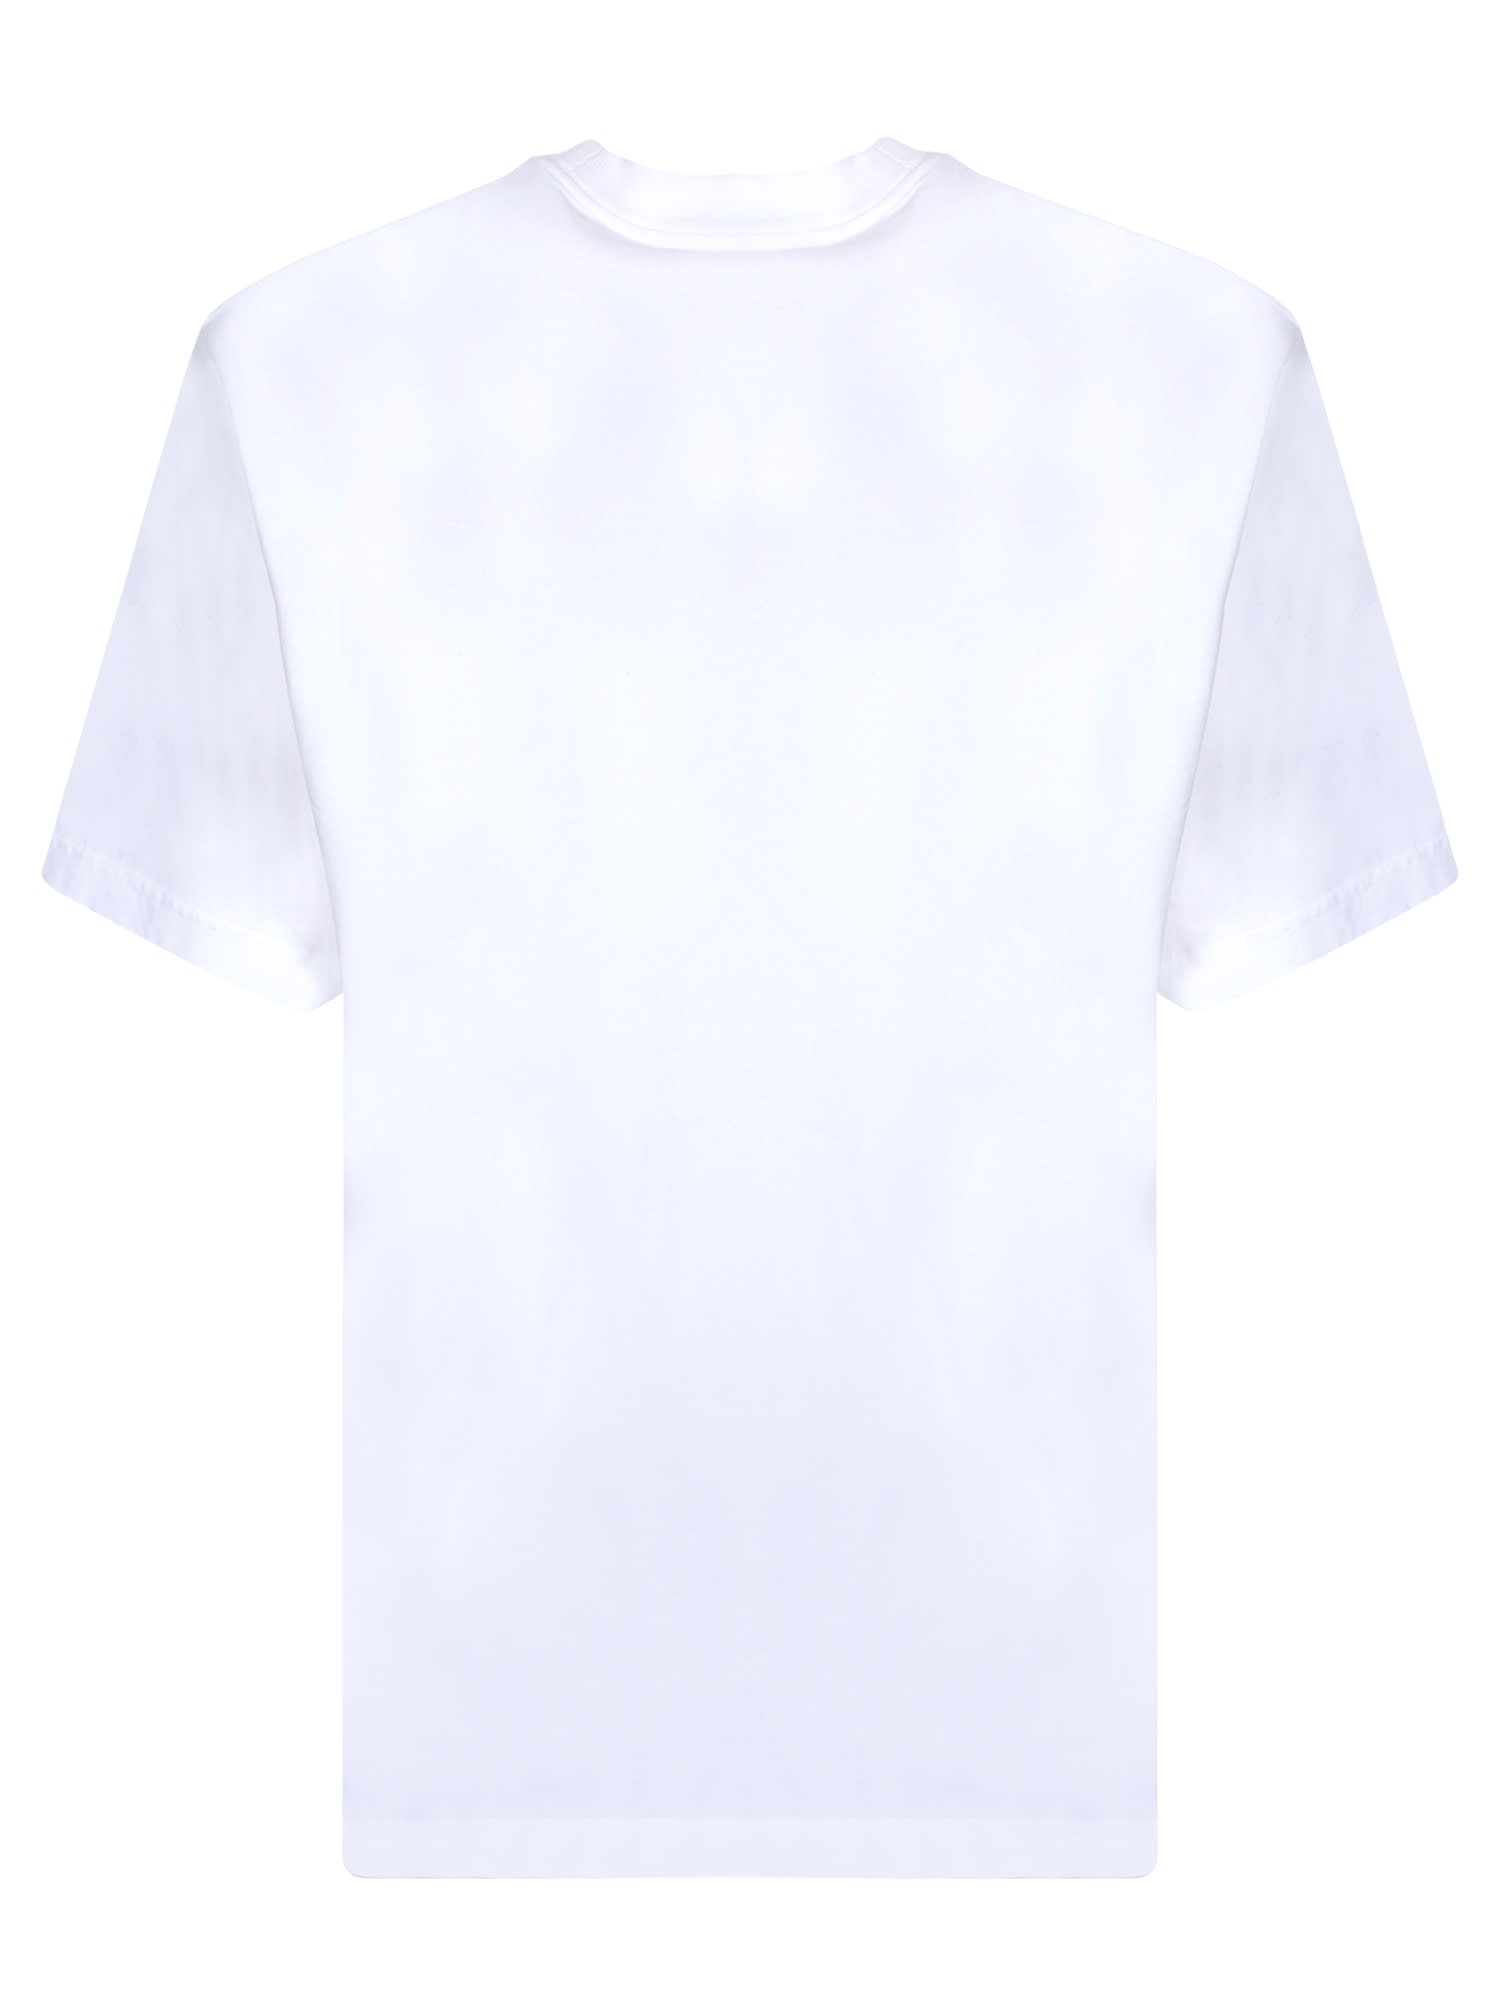 Shop Axel Arigato Siganture White T-shirt